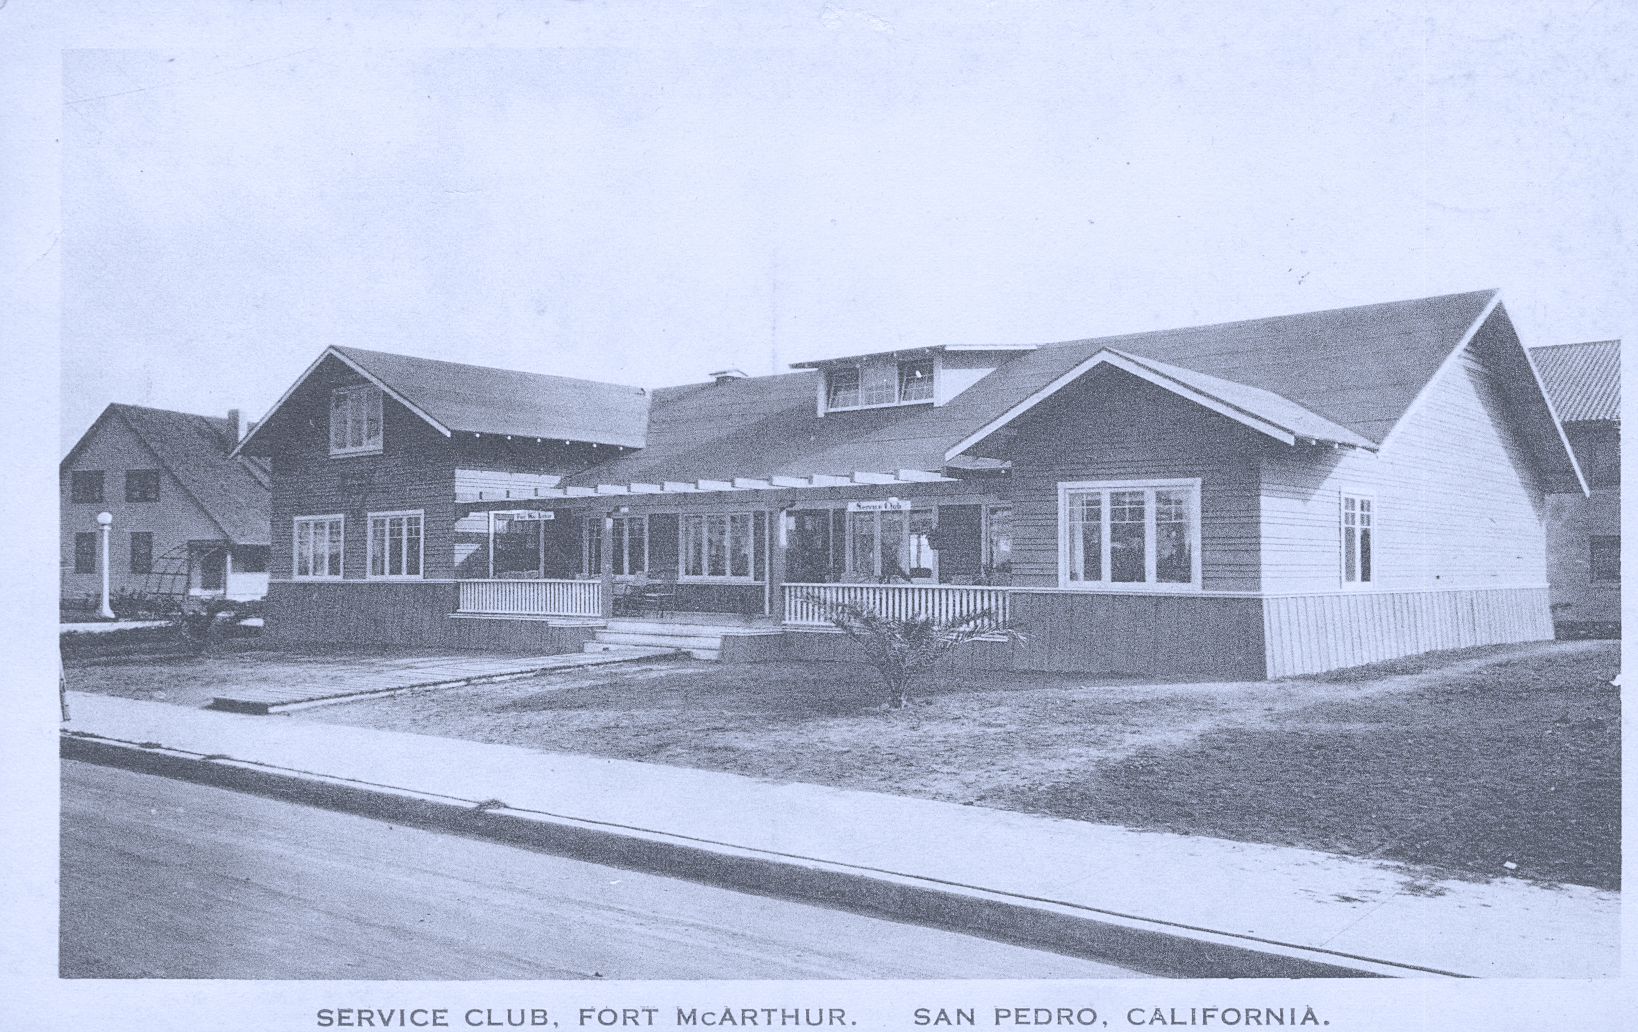 Service Club, Fort Mac Arthur, San Pedro, California